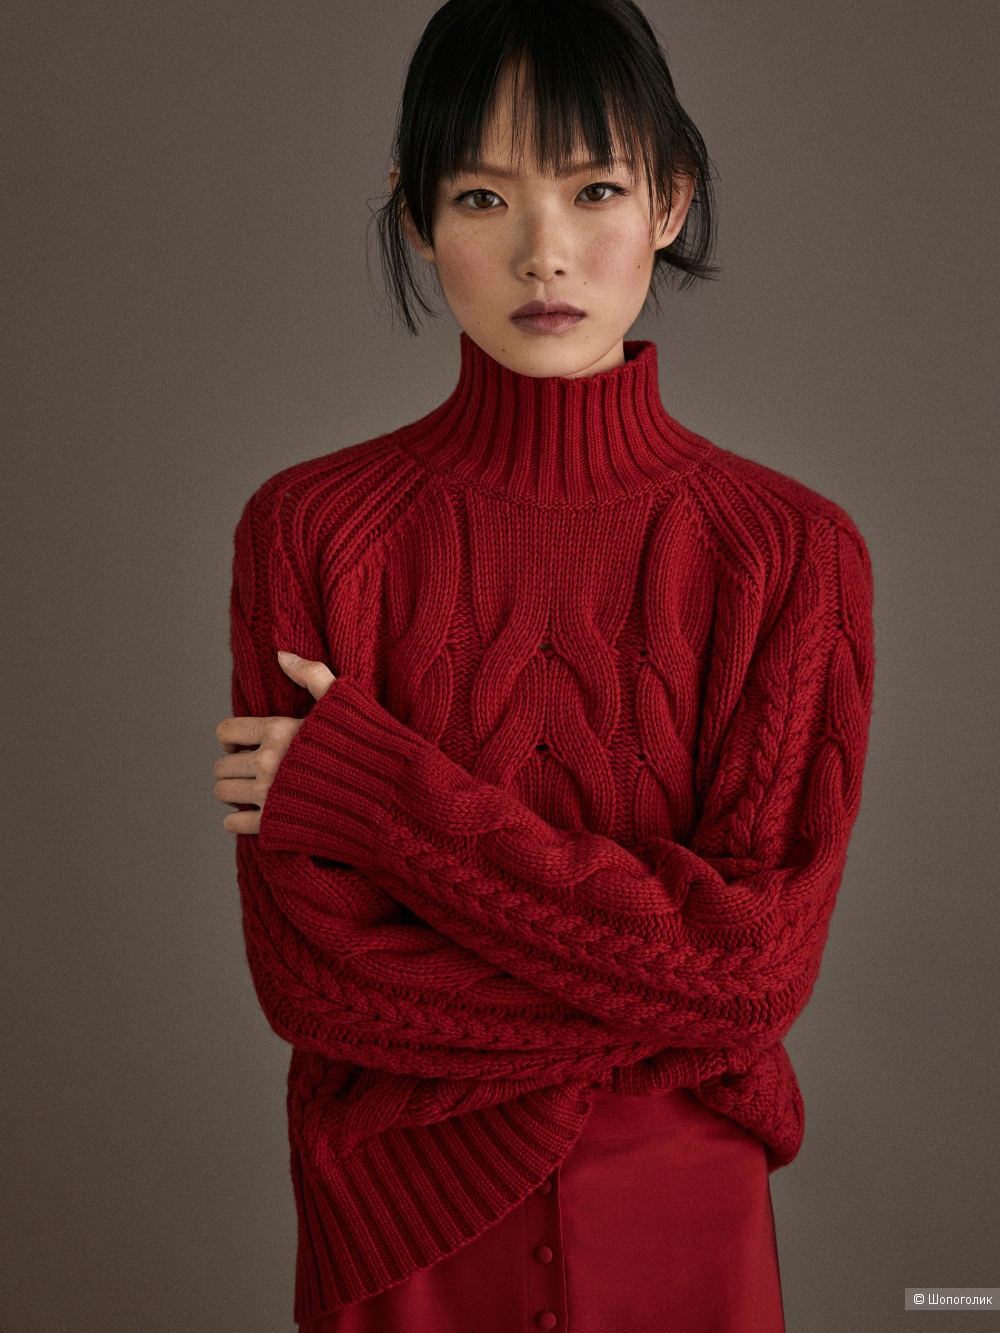 Пуловер  Massimo Dutti в размере М